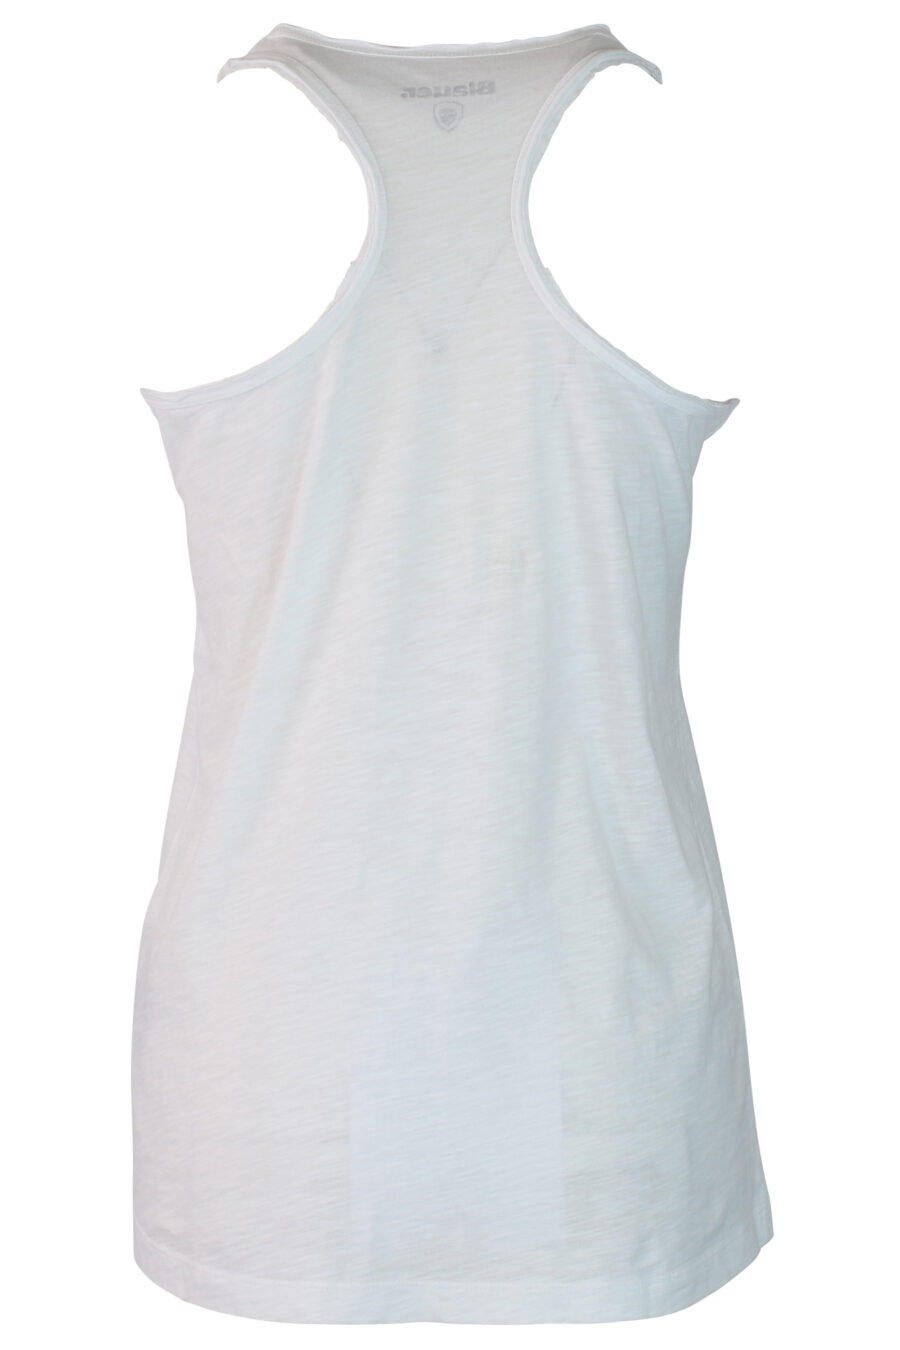 White sleeveless T-shirt with silver maxilogue - IMG 0373